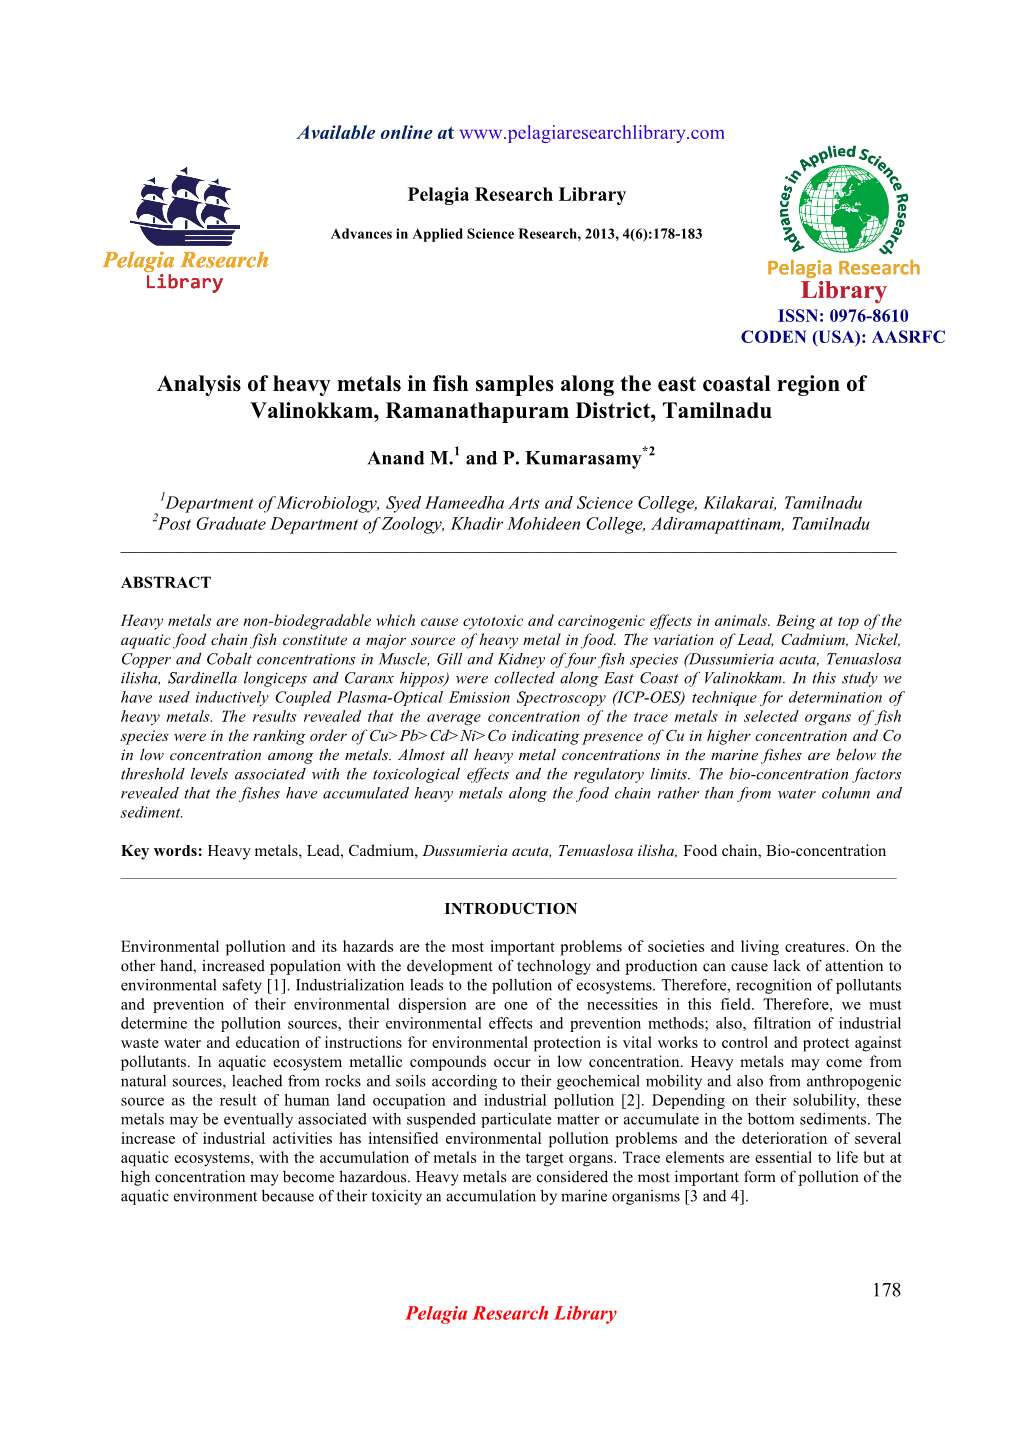 Analysis of Heavy Metals in Fish Samples Along the East Coastal Region of Valinokkam, Ramanathapuram District, Tamilnadu